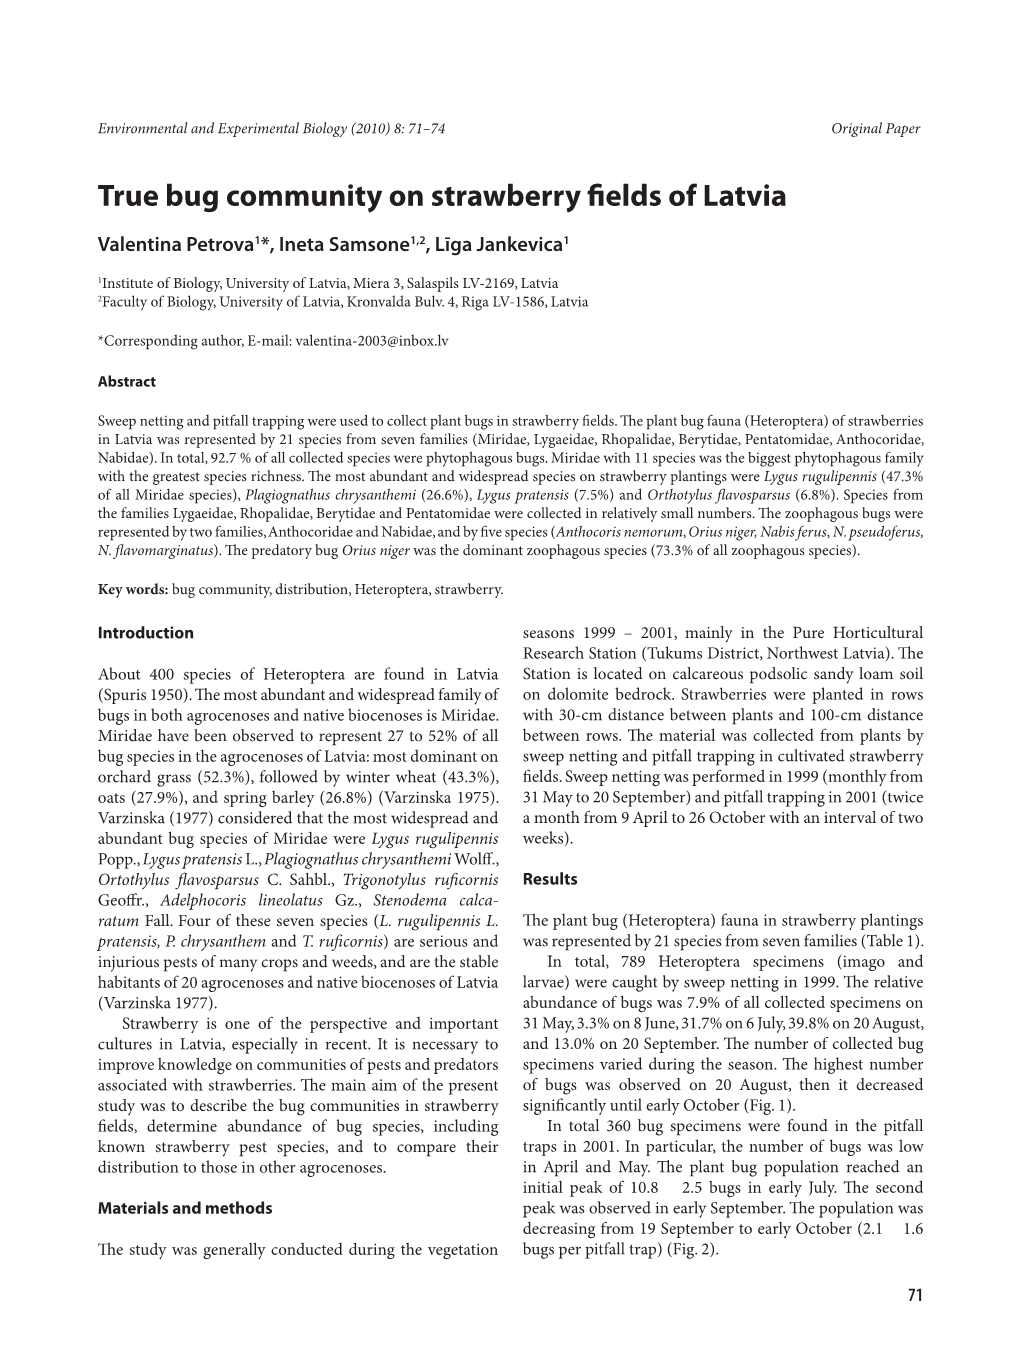 True Bug Community on Strawberry Fields of Latvia